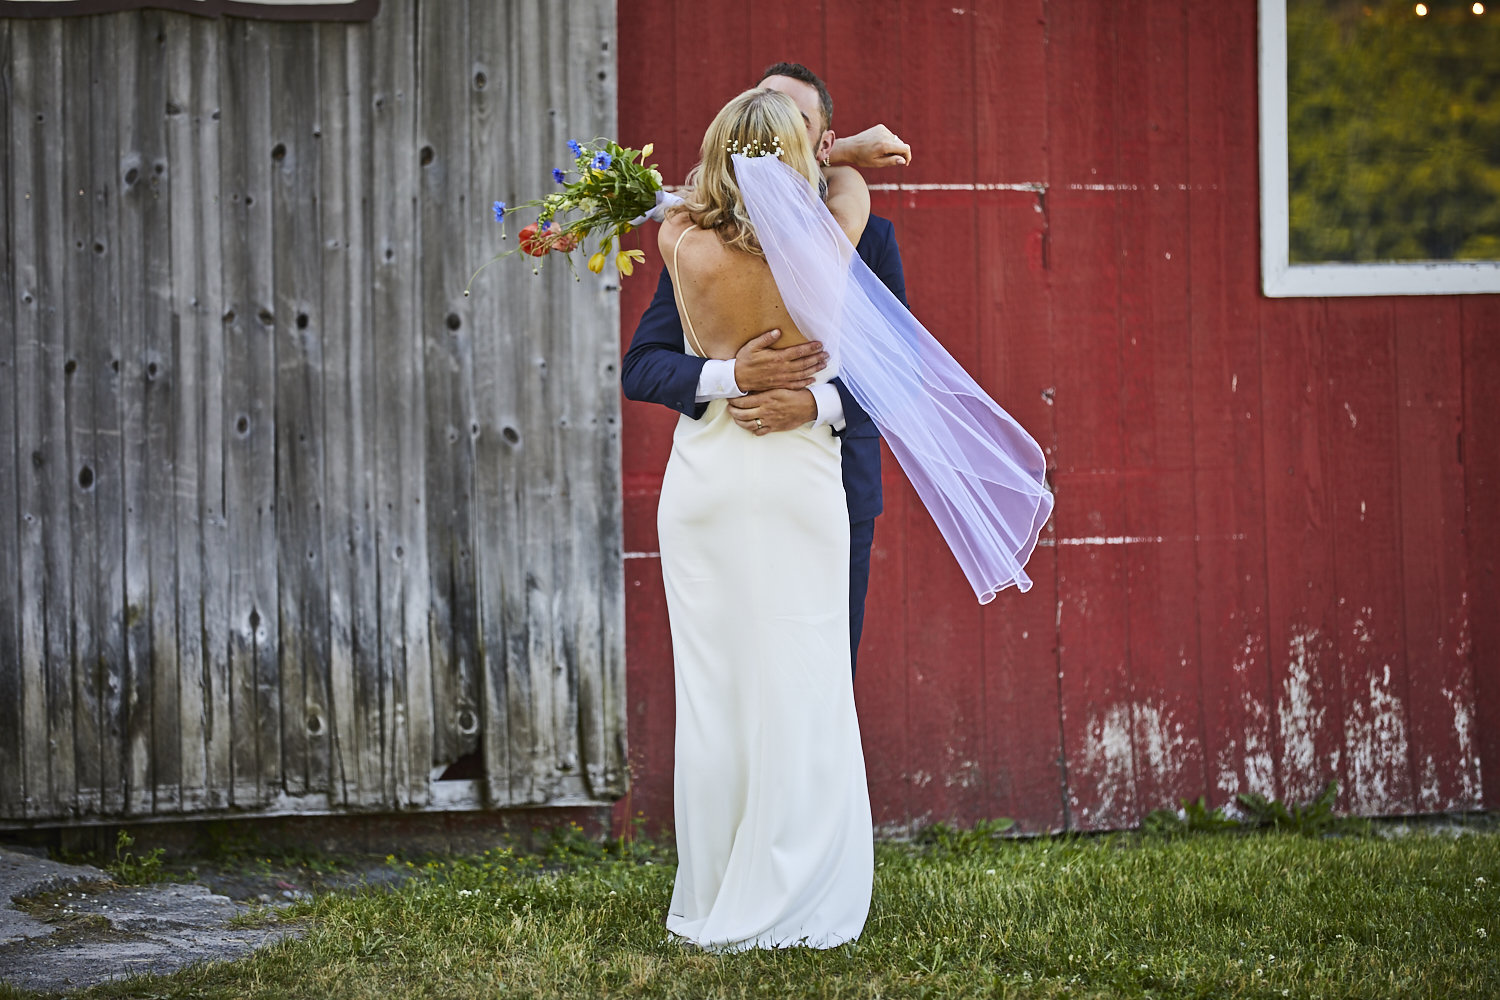 An inside look at HGTV Canada star Sarah Keenleyside and singer/songwriter Justin Rutledge's wedding